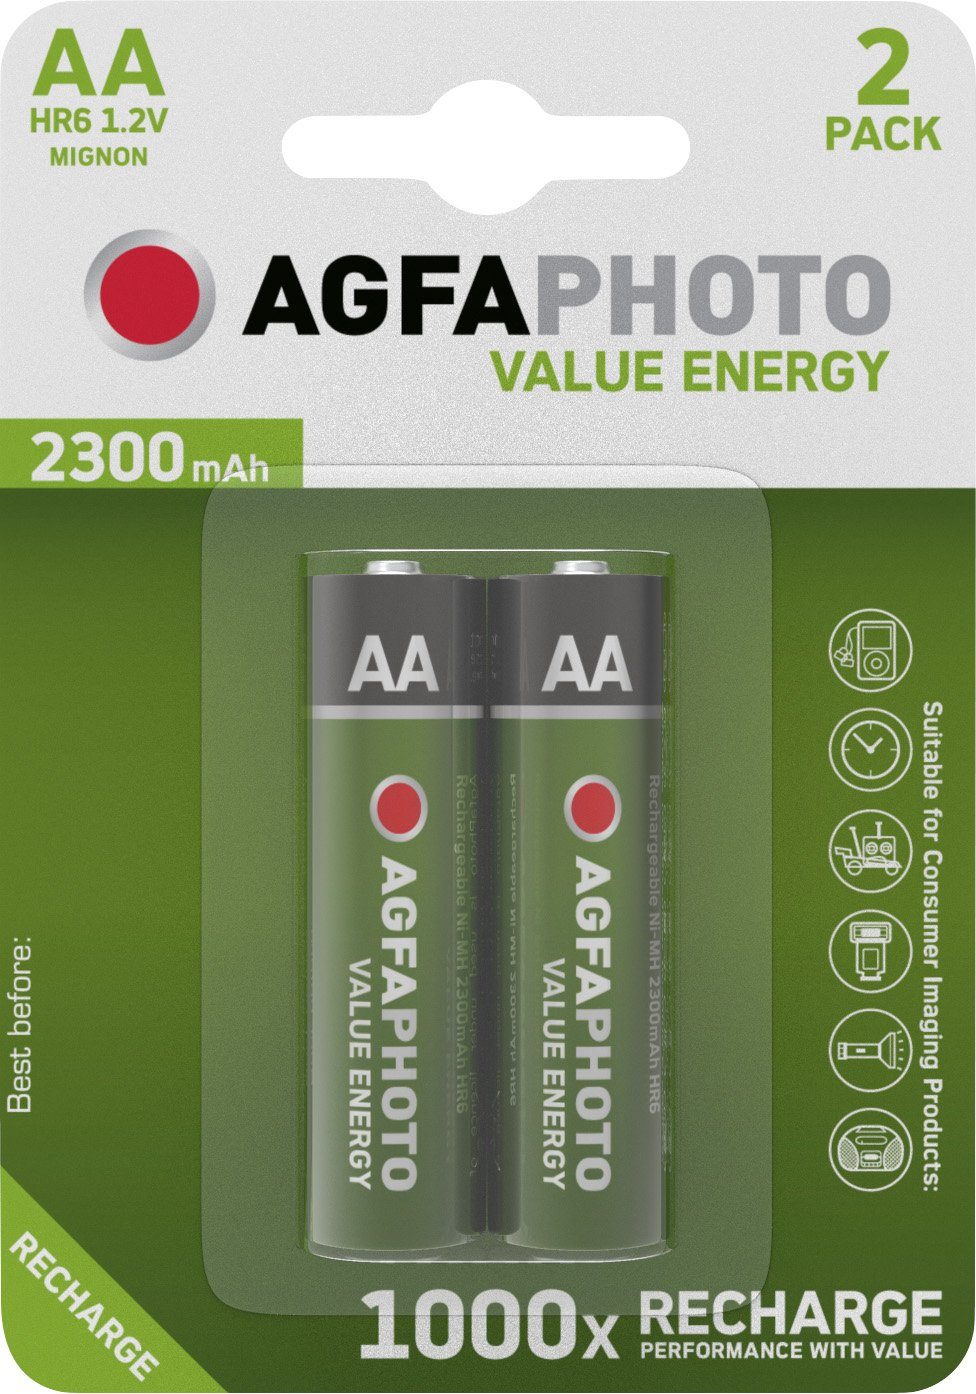 AgfaPhoto Agfaphoto Akku NiMH, Mignon, AA, HR06, 1.2V/2300mAh Value Energy, Ret Akku